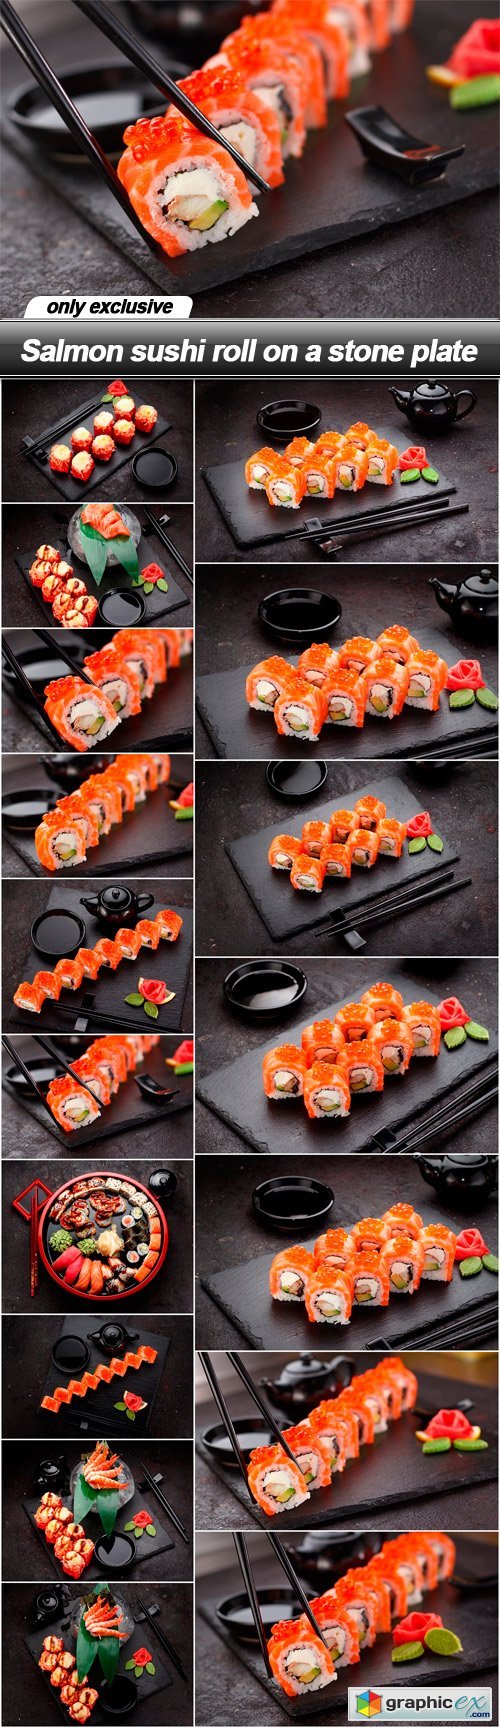 Salmon sushi roll on a stone plate 2 - 17 UHQ JPEG